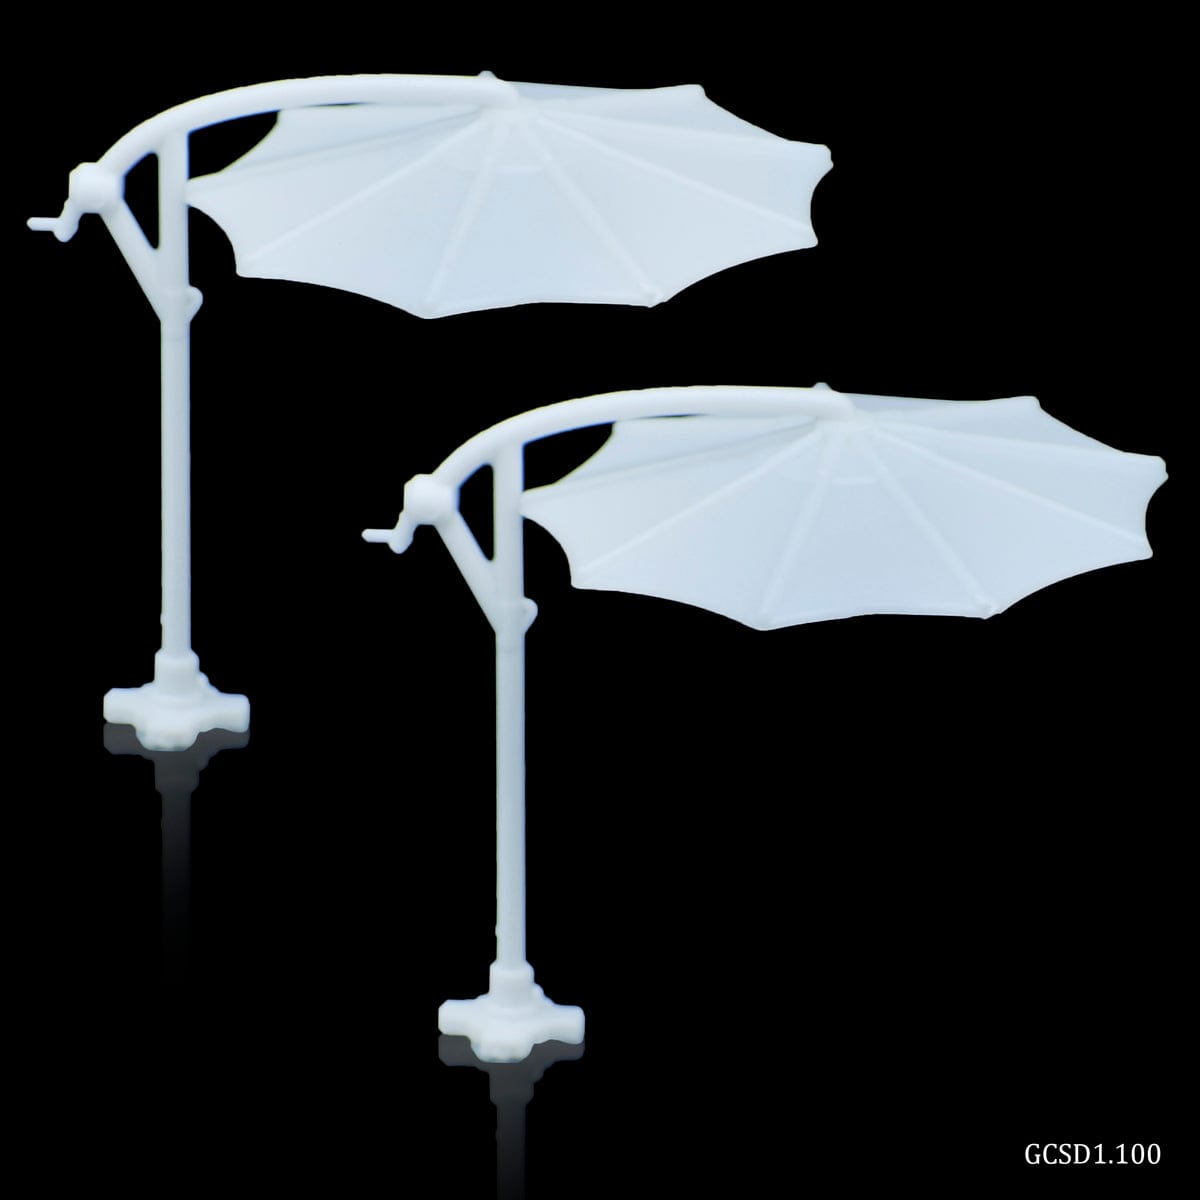 jags-mumbai Miniature Miniature Model Umbrella Set Of 2 Pics GCSD1.100